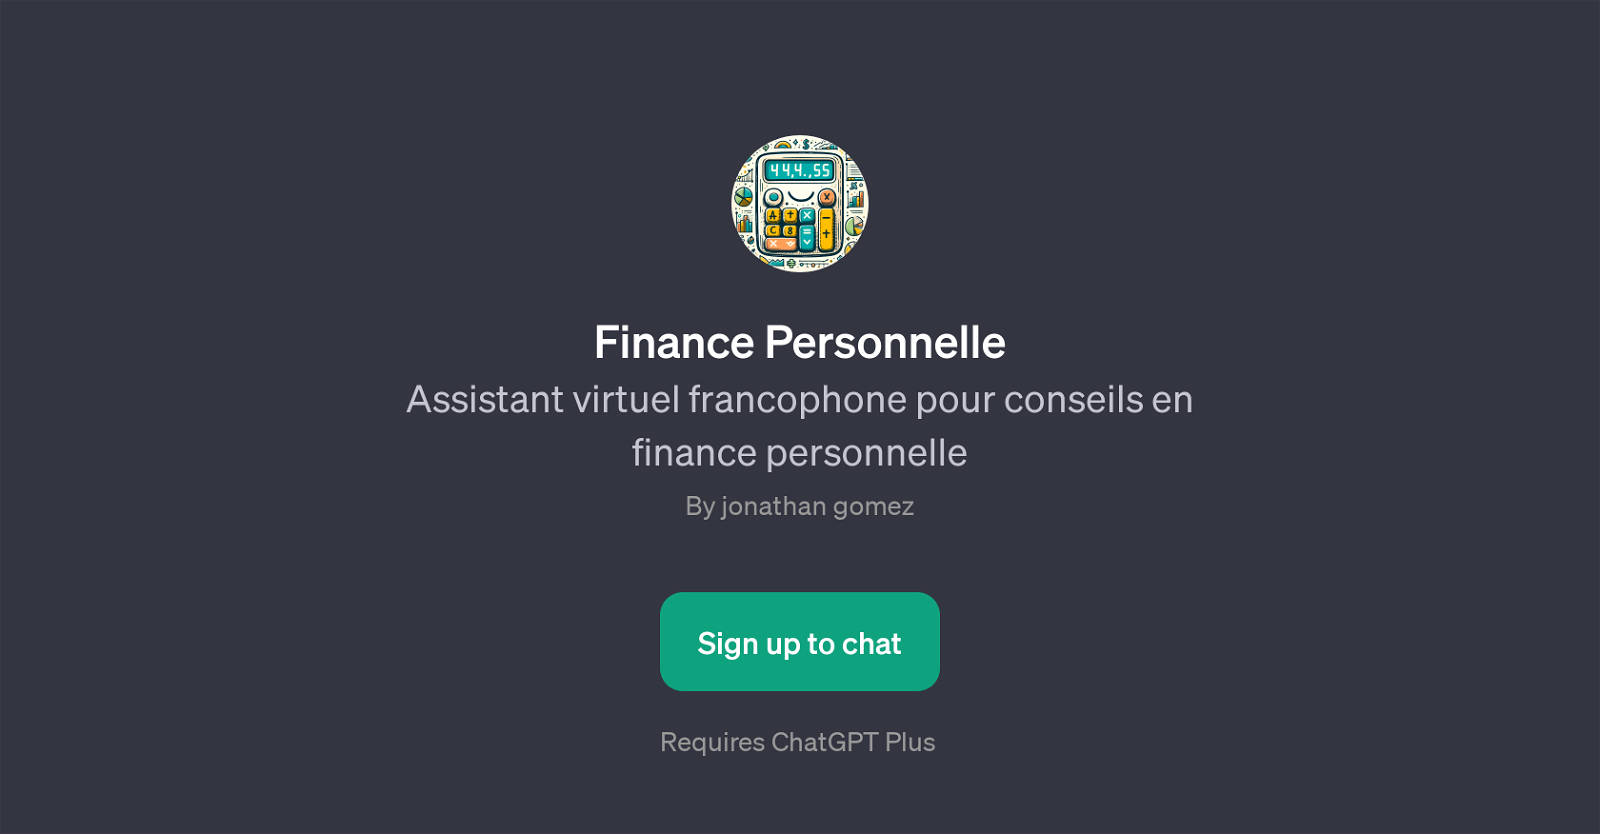 Finance Personnelle website